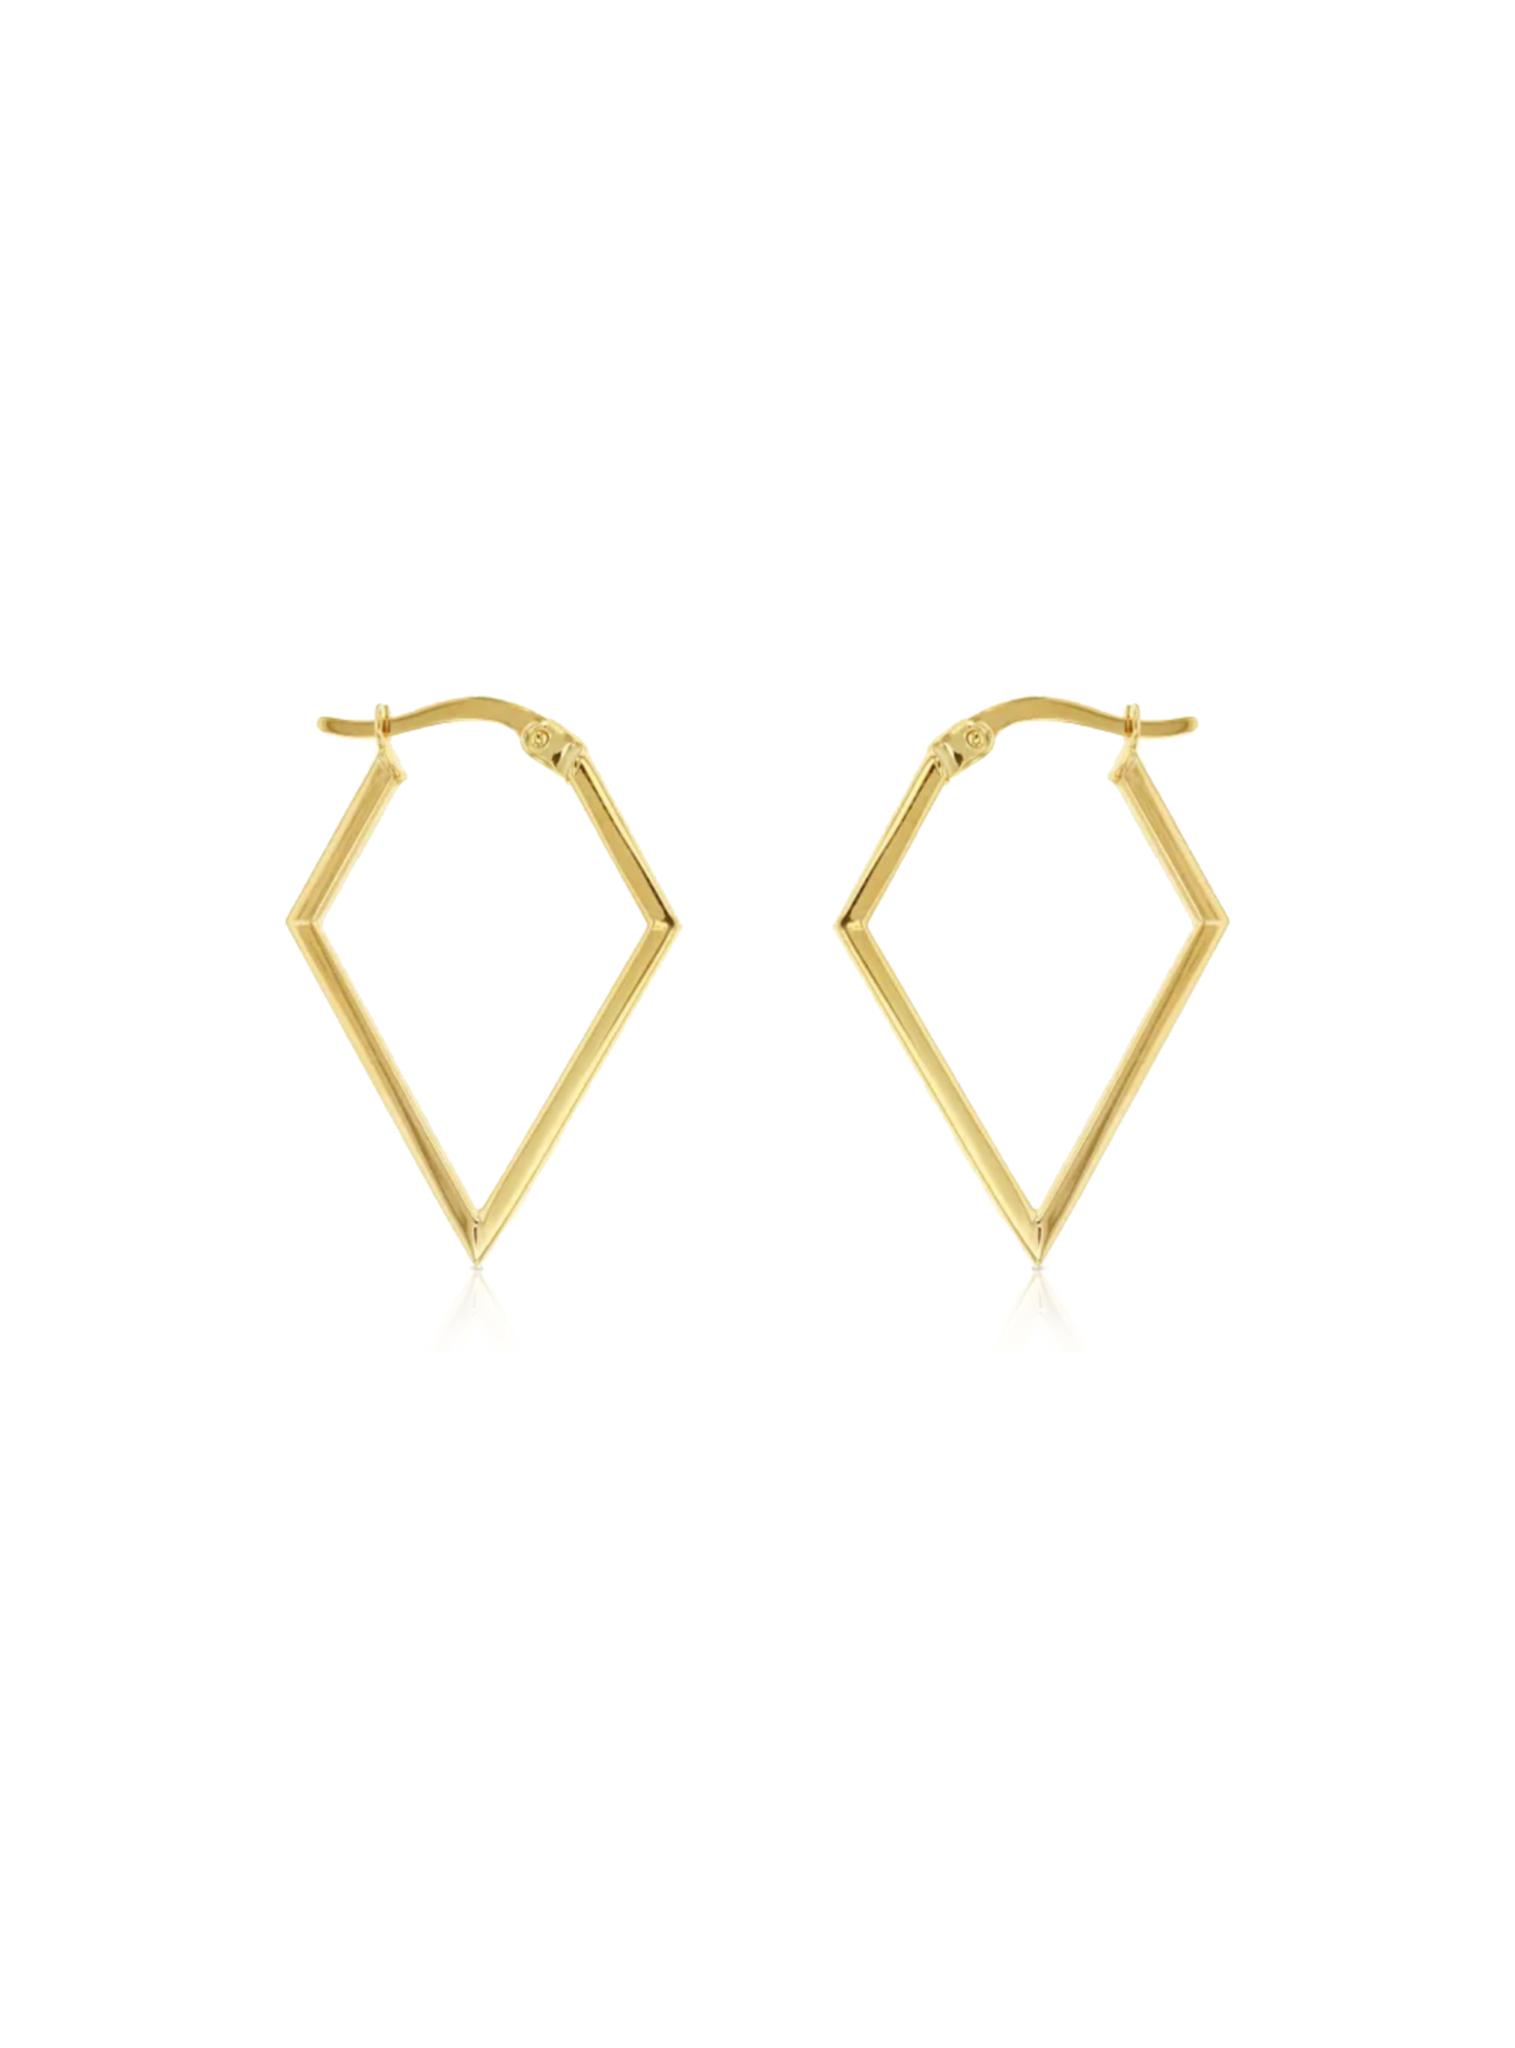 Buy Loveyoufashion Light Weight diamond shape hoop earrings at Amazonin